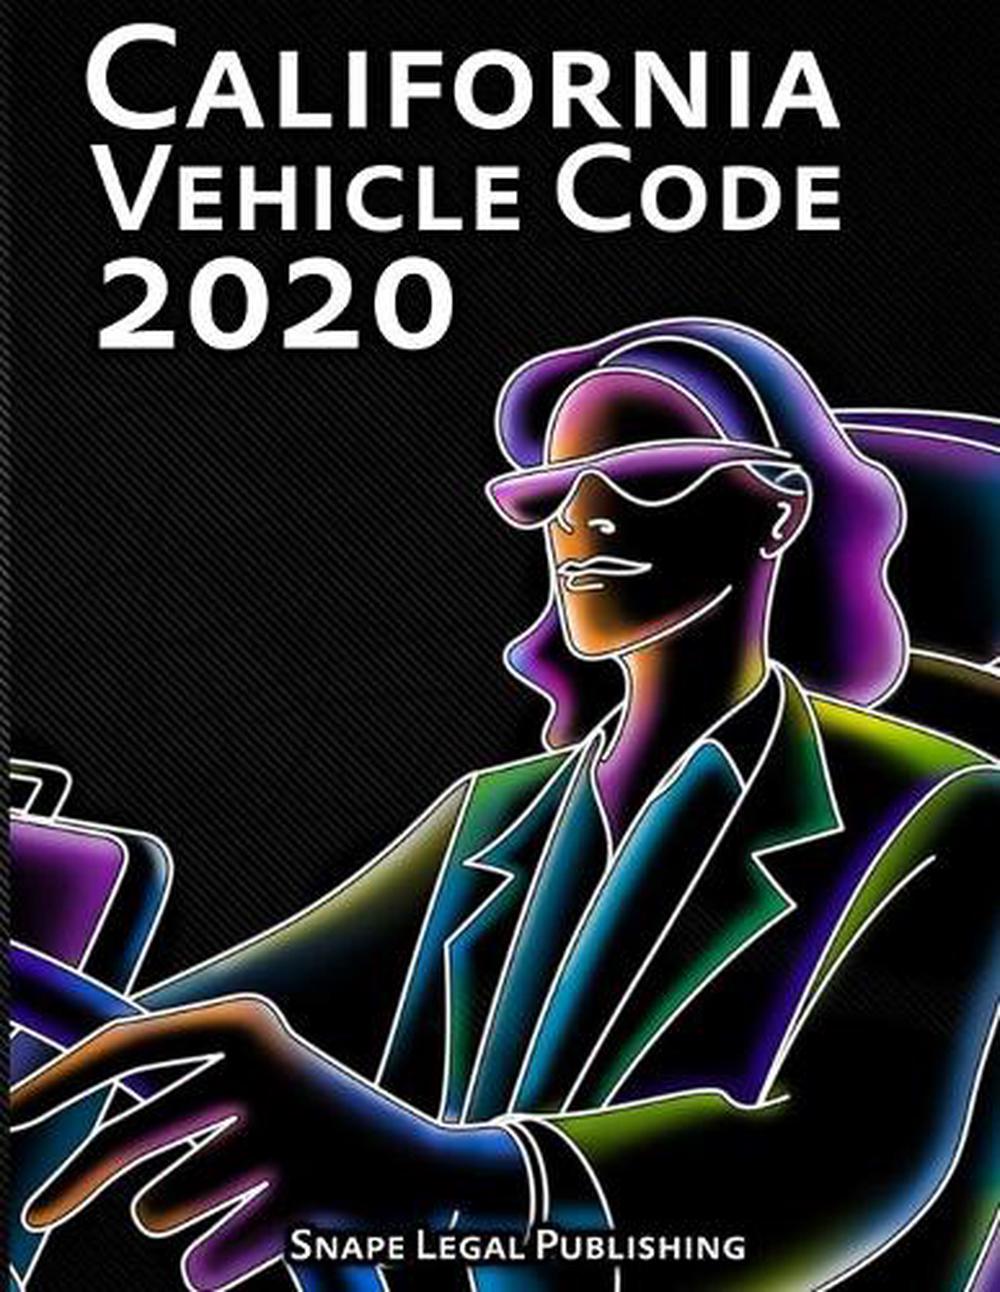 California Vehicle Code 2020 by John Snape (English) Paperback Book